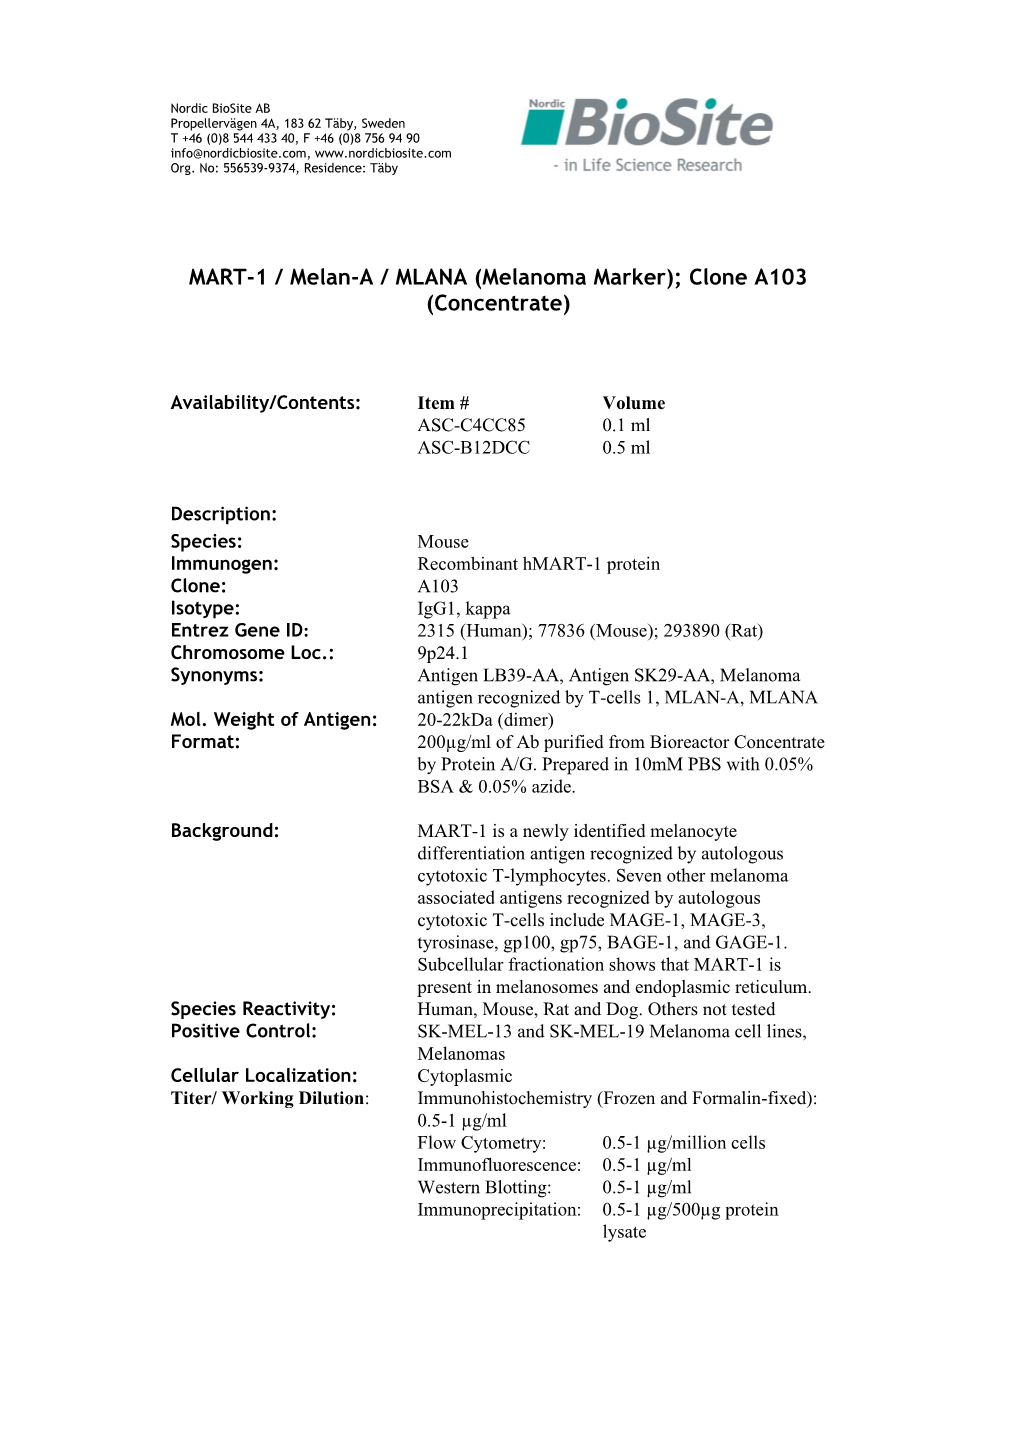 MART-1 / Melan-A / MLANA (Melanoma Marker); Clone A103 (Concentrate)